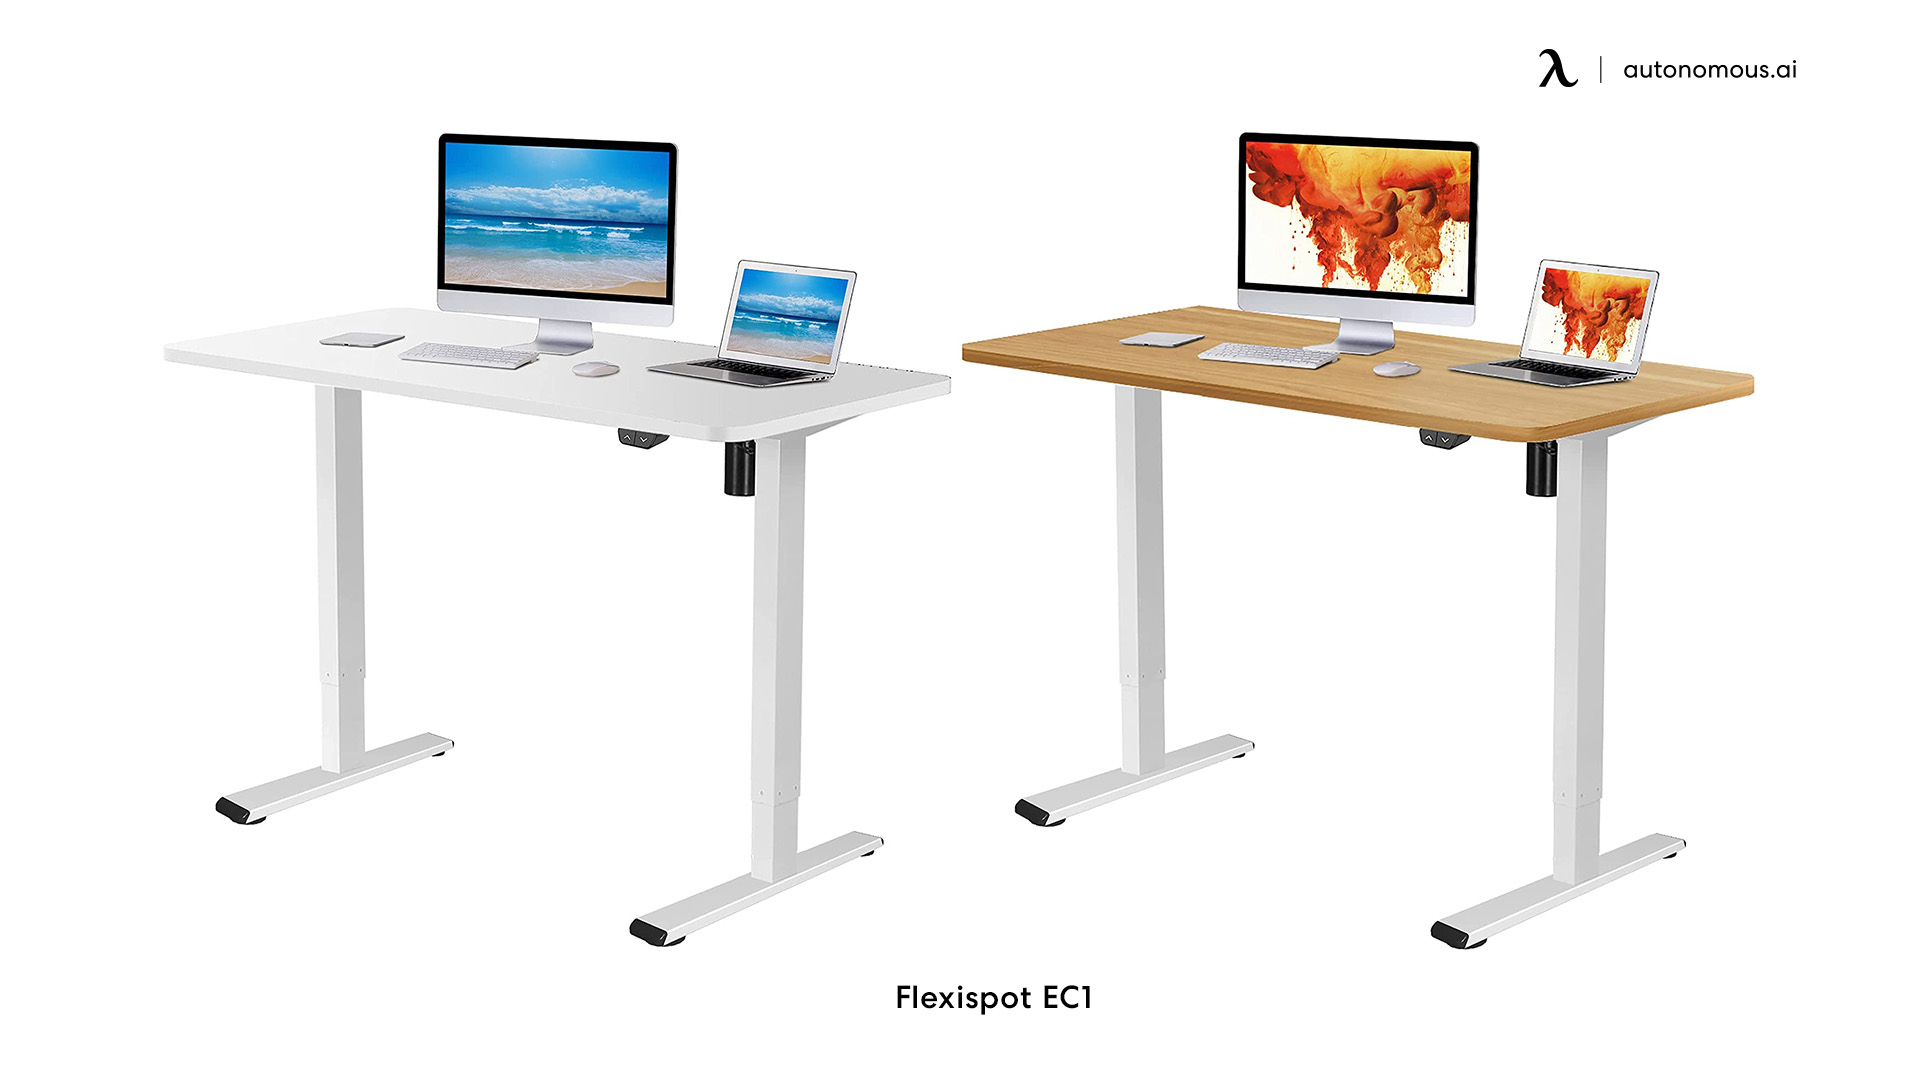 Flexispot EC1 ergonomic desk height